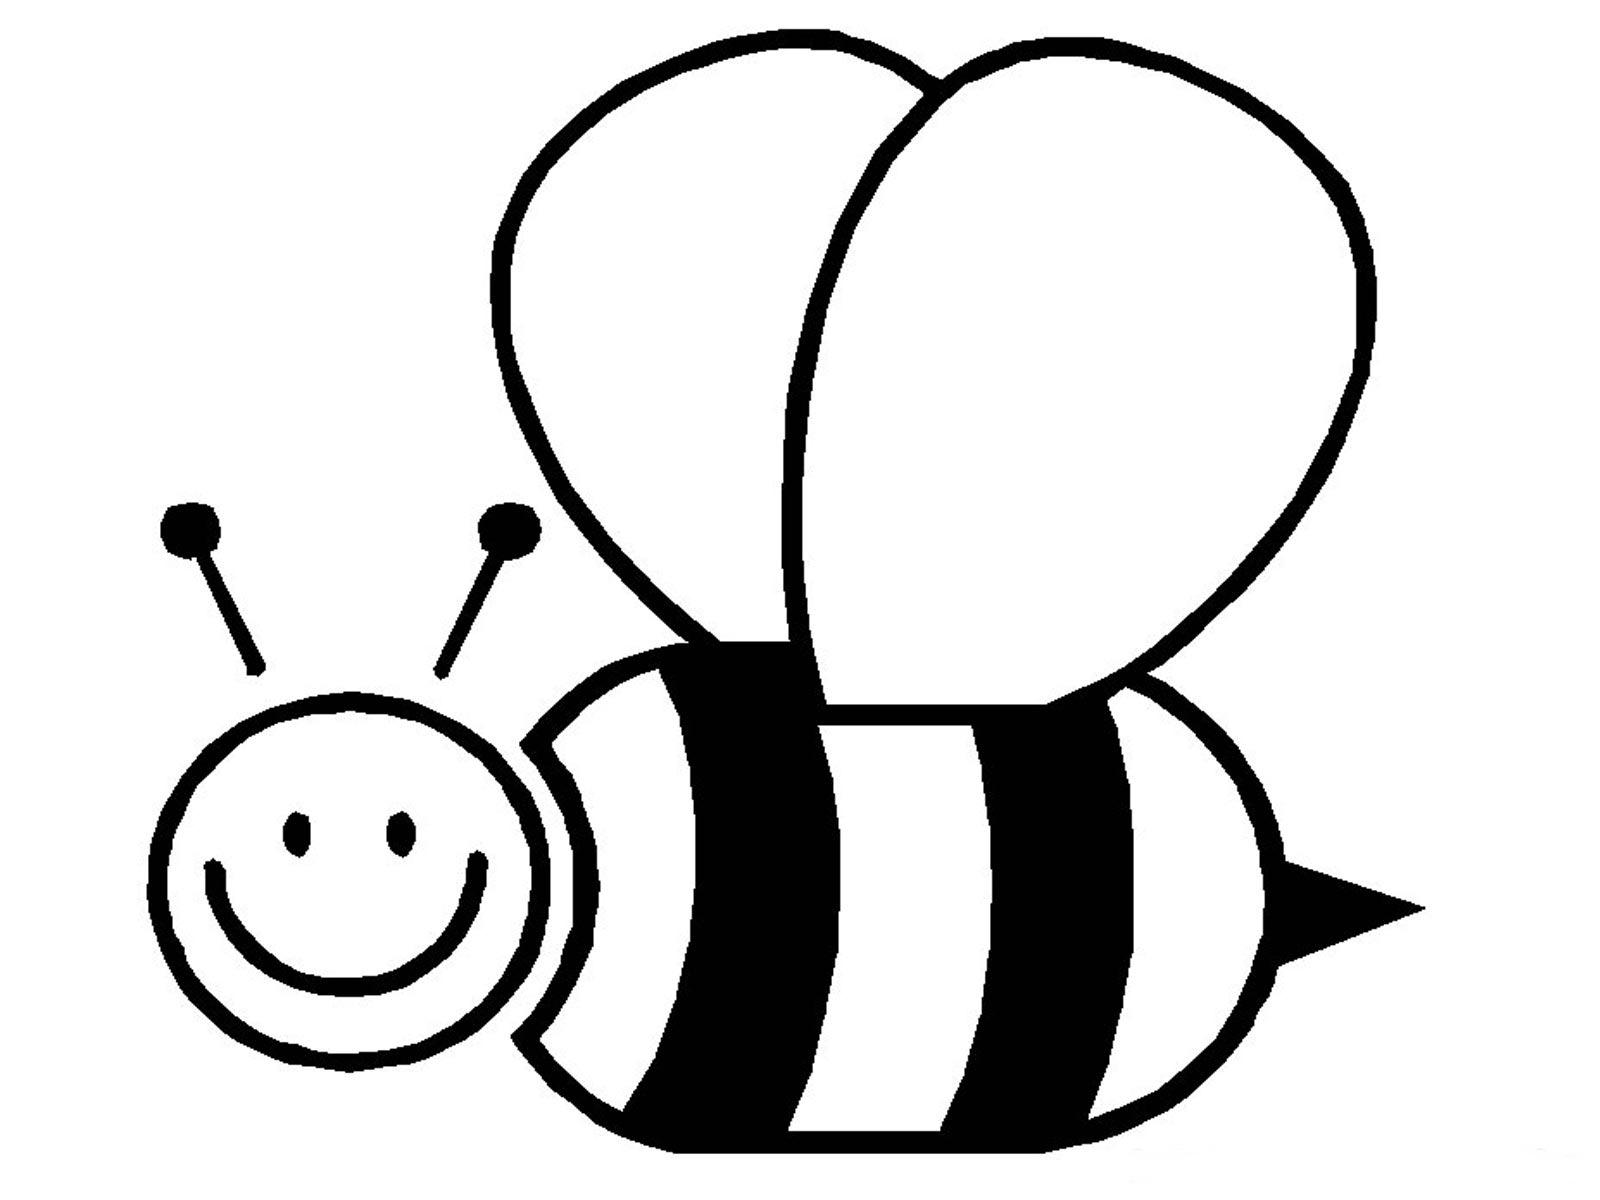 Bumble Bee Template Preschool - ClipArt Best